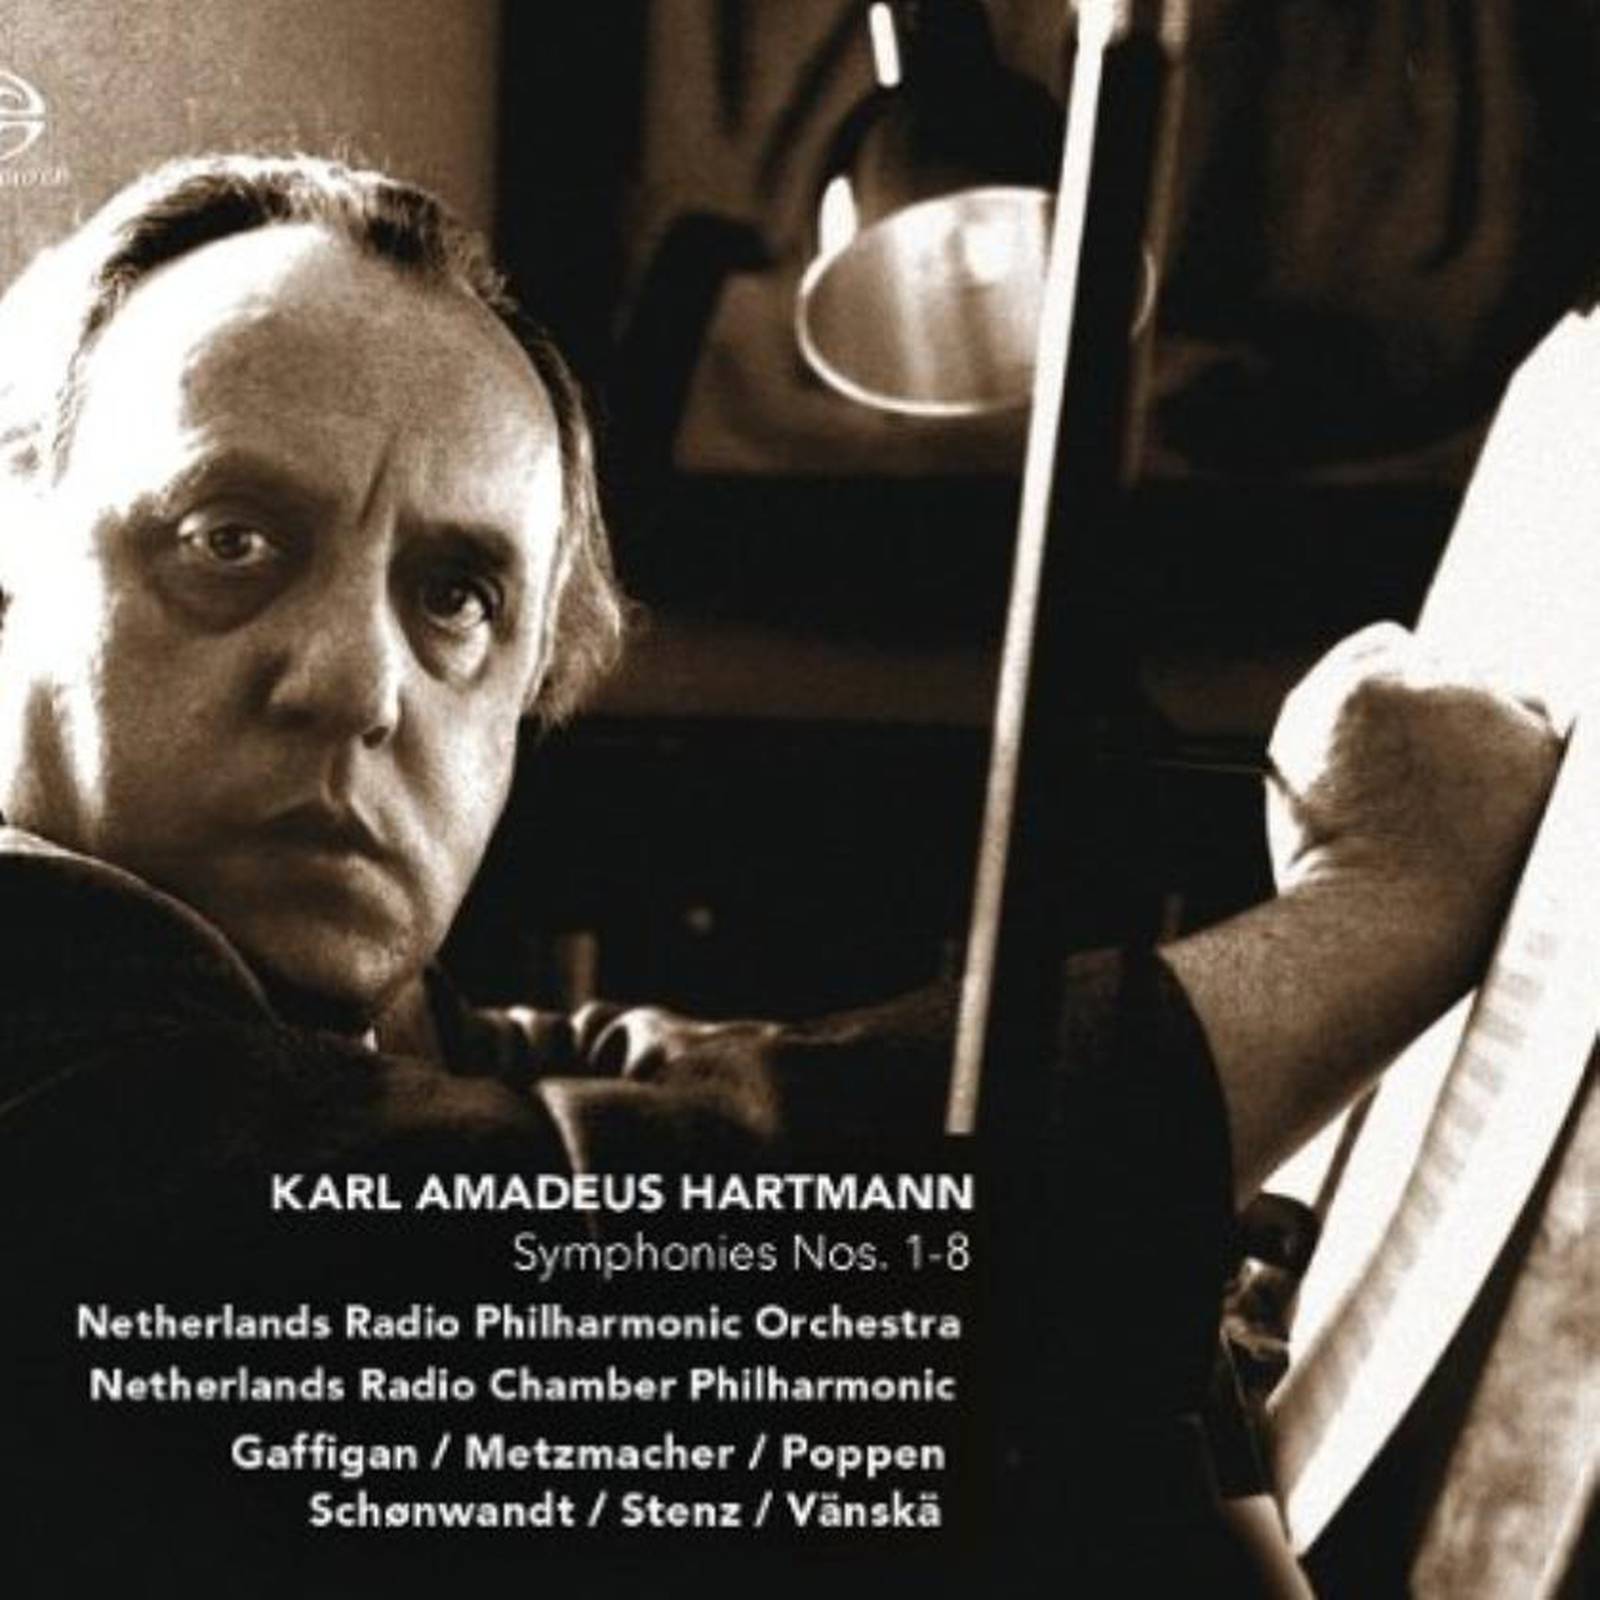 Hartmann: Symphonies 1-8 Netherlands Radio Orchestras – The Irish Times